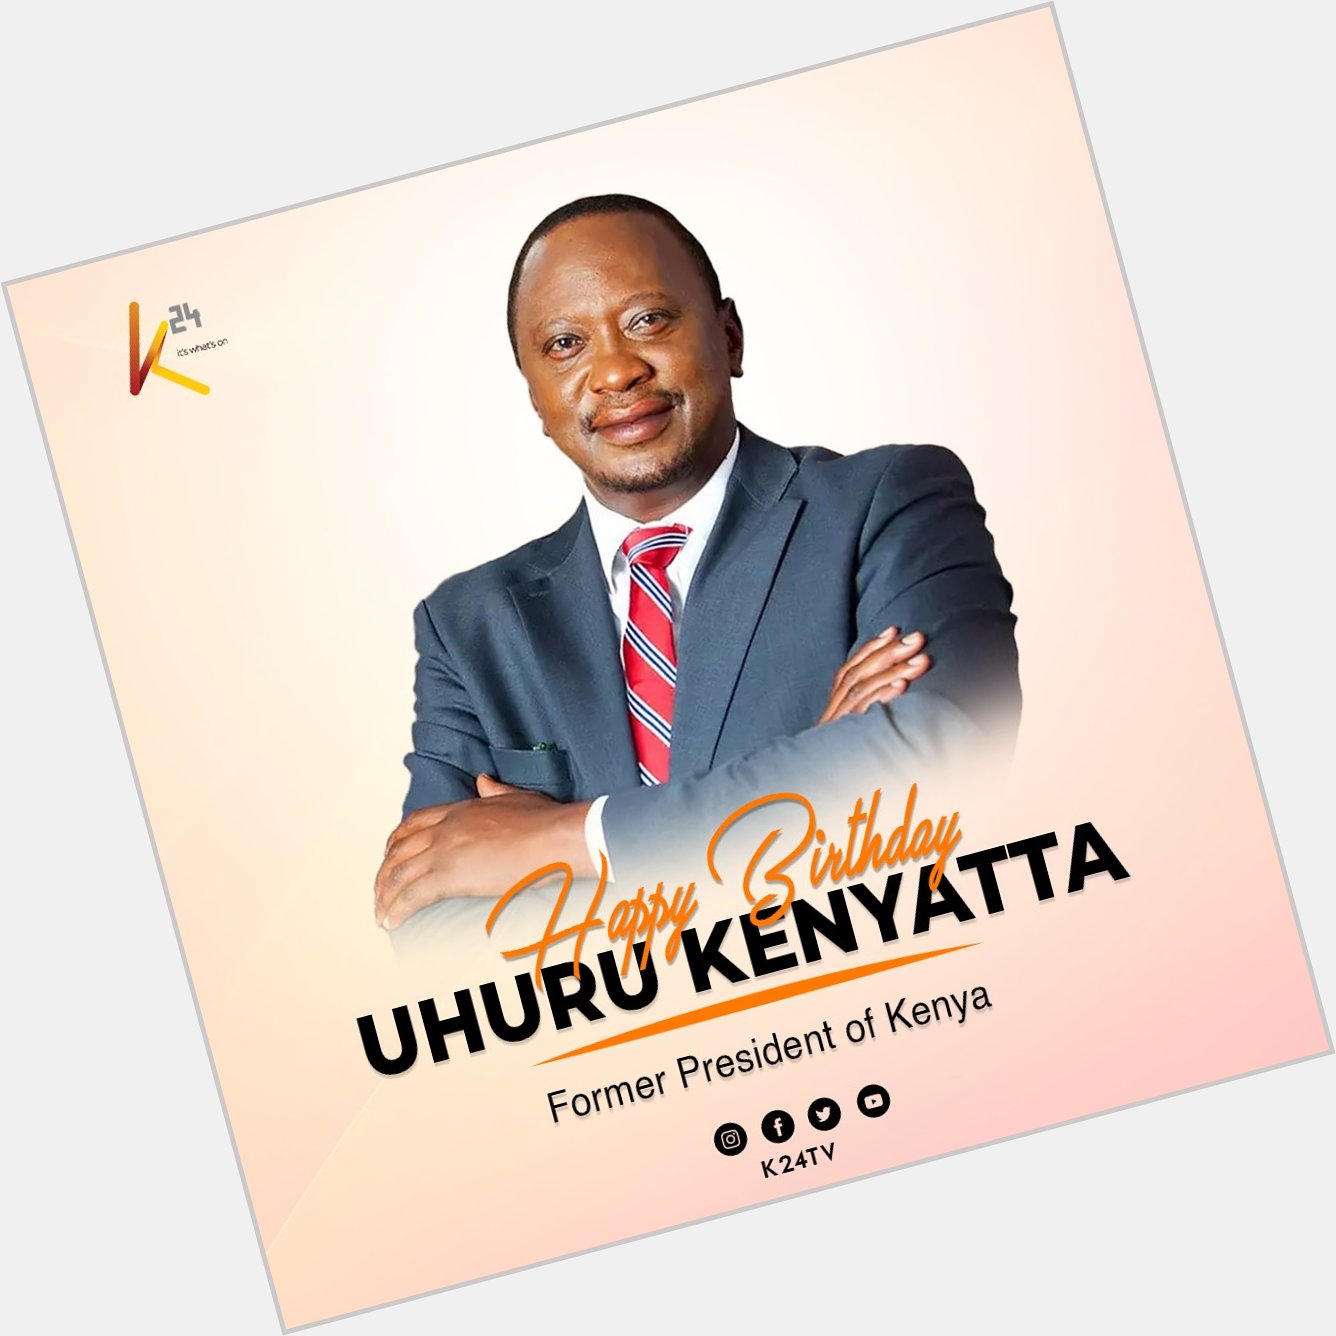 Happy birthday your Excellency Uhuru Kenyatta 